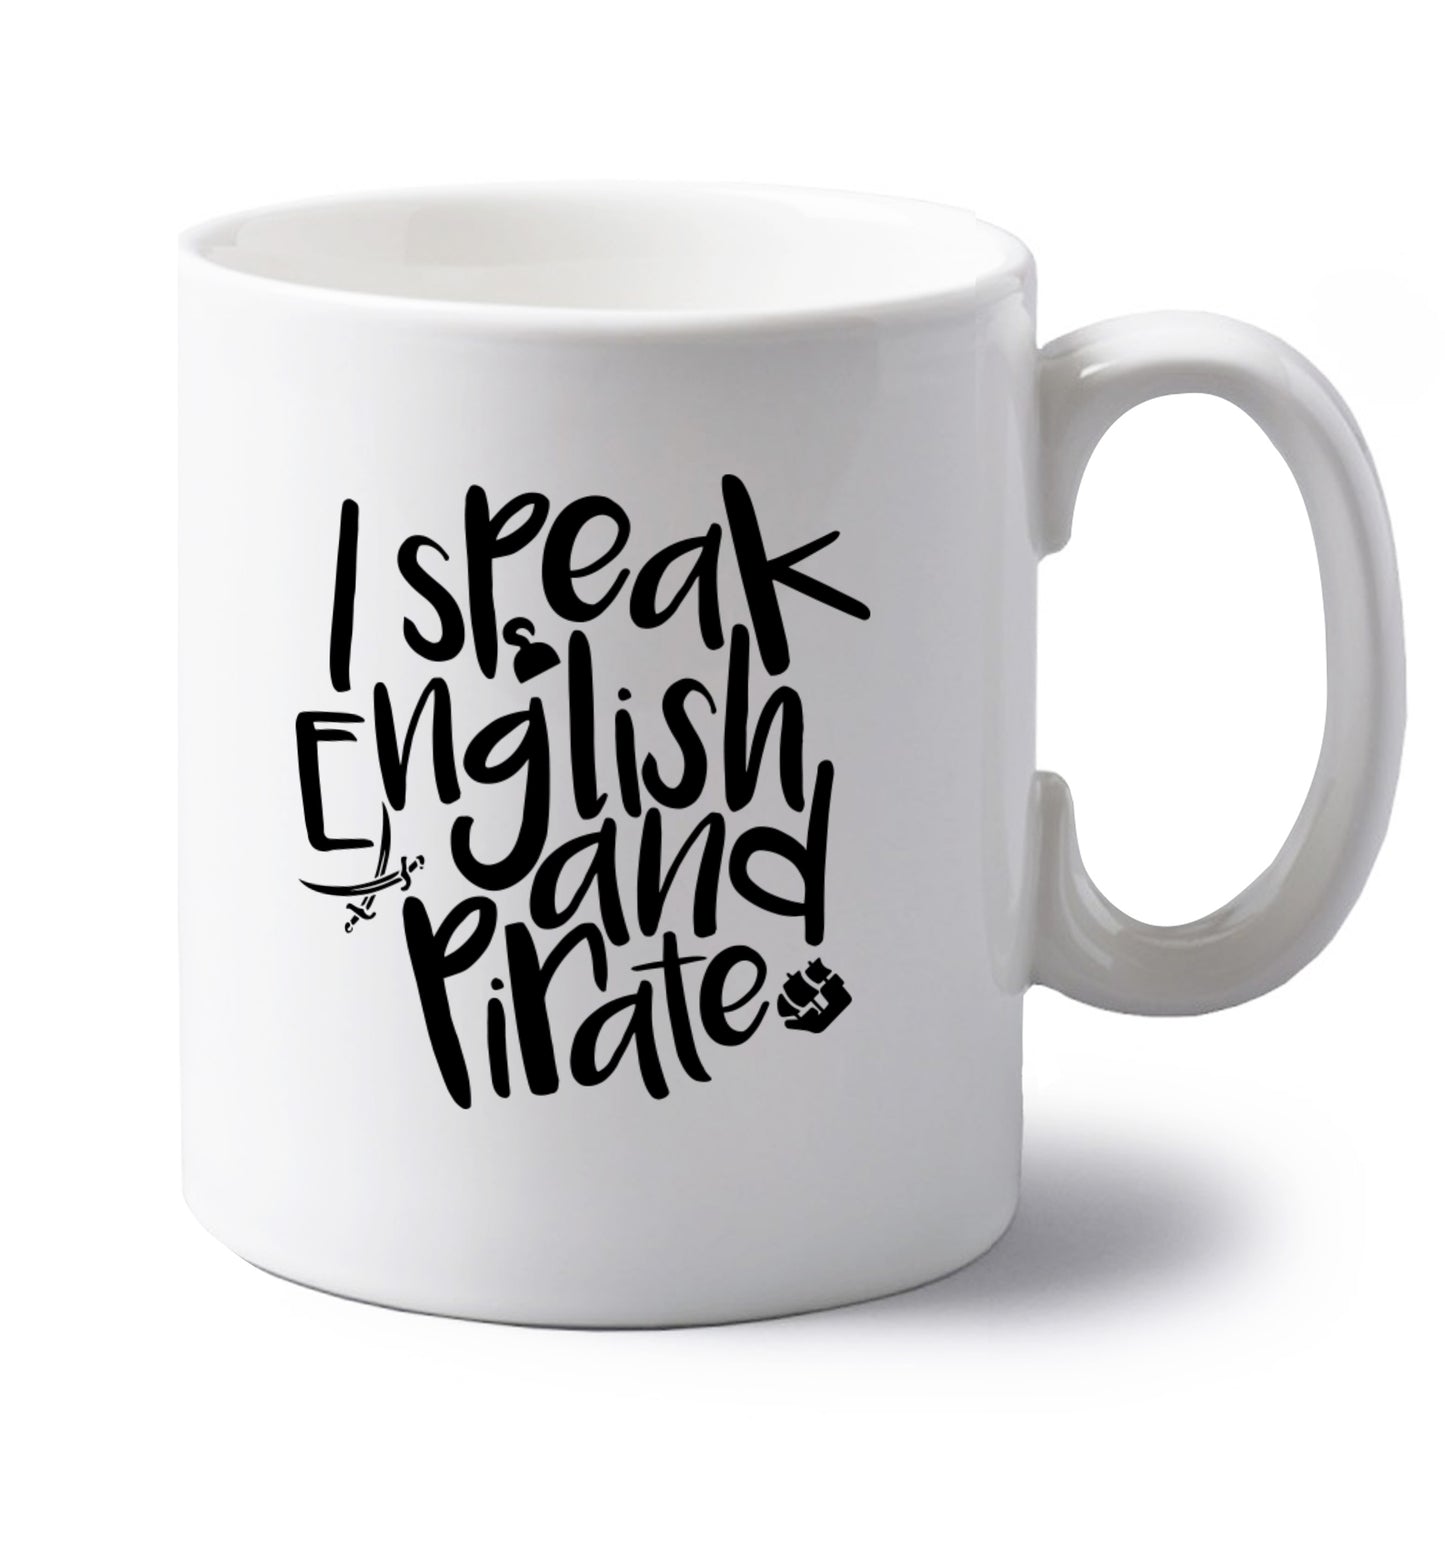 I speak English and pirate left handed white ceramic mug 